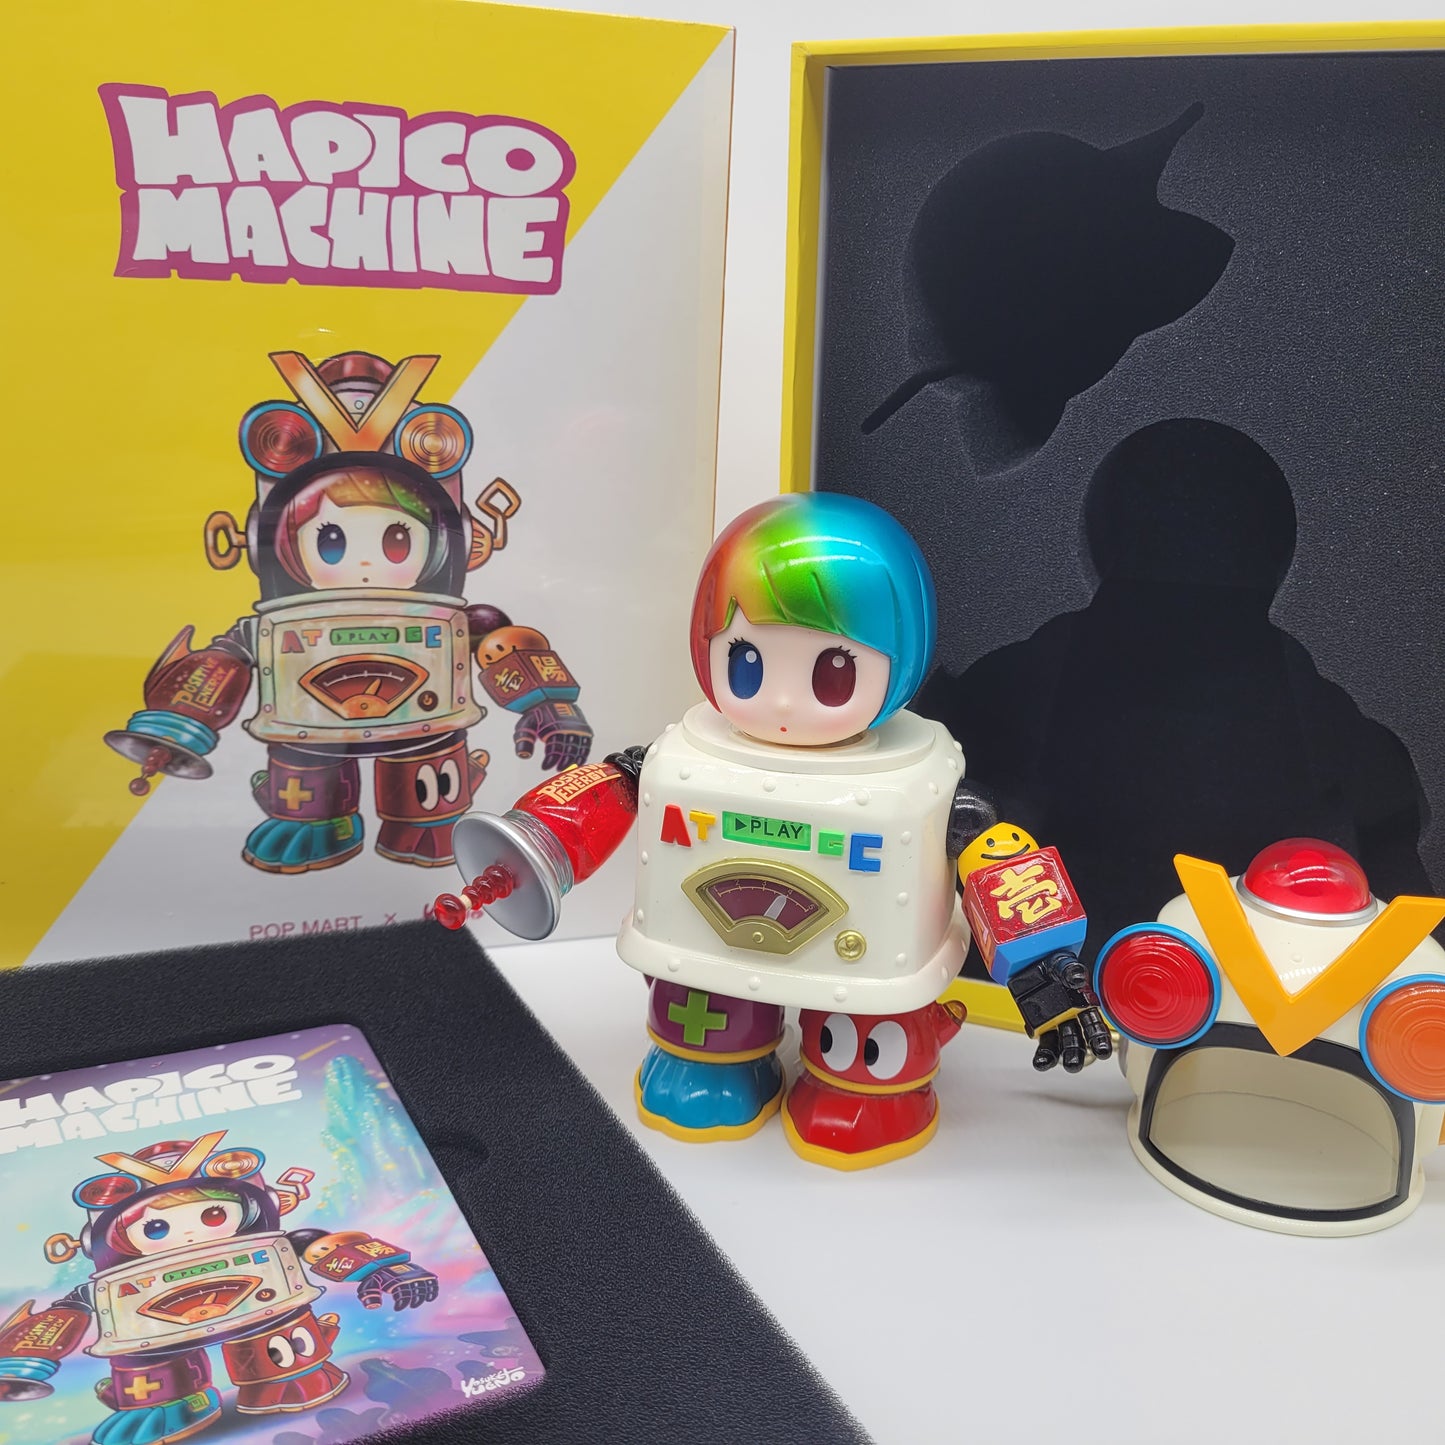 ETTV POPMART HAPIKO Machine by Yosuke Ueno 200% Figurine Collectible Toy Action Figure